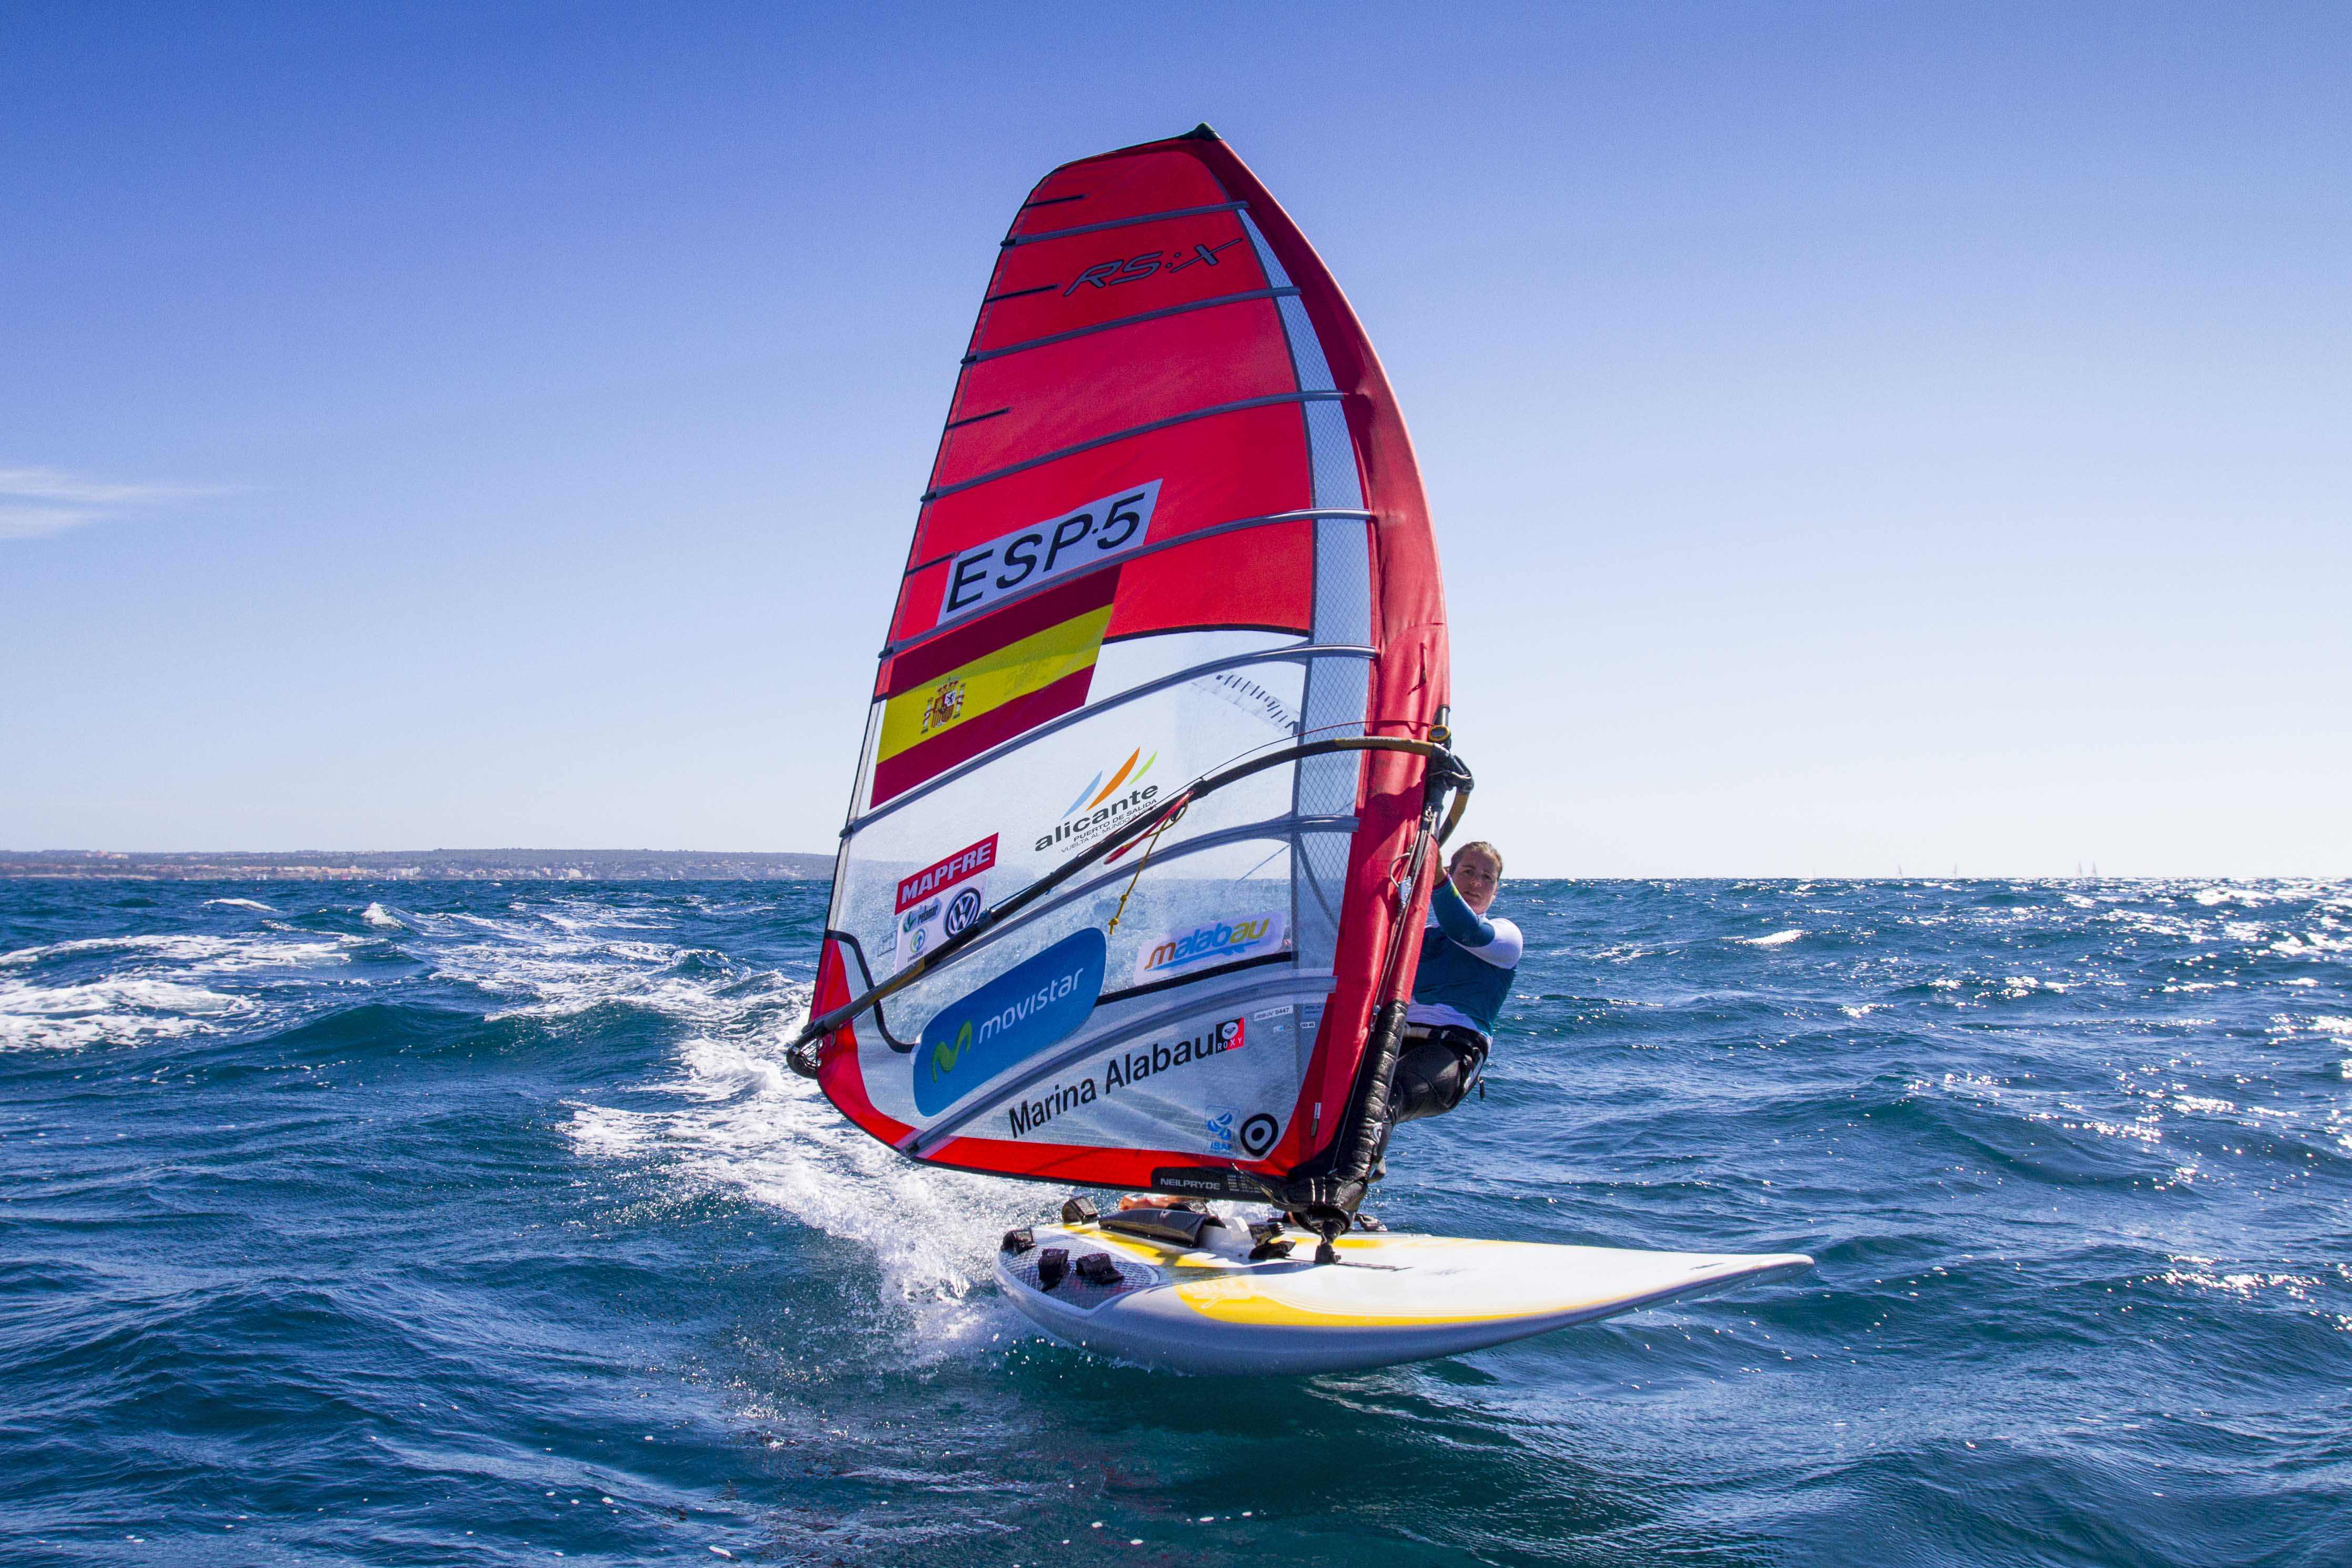 La windsurfista Movistar, Marina Alabau en su RS:X